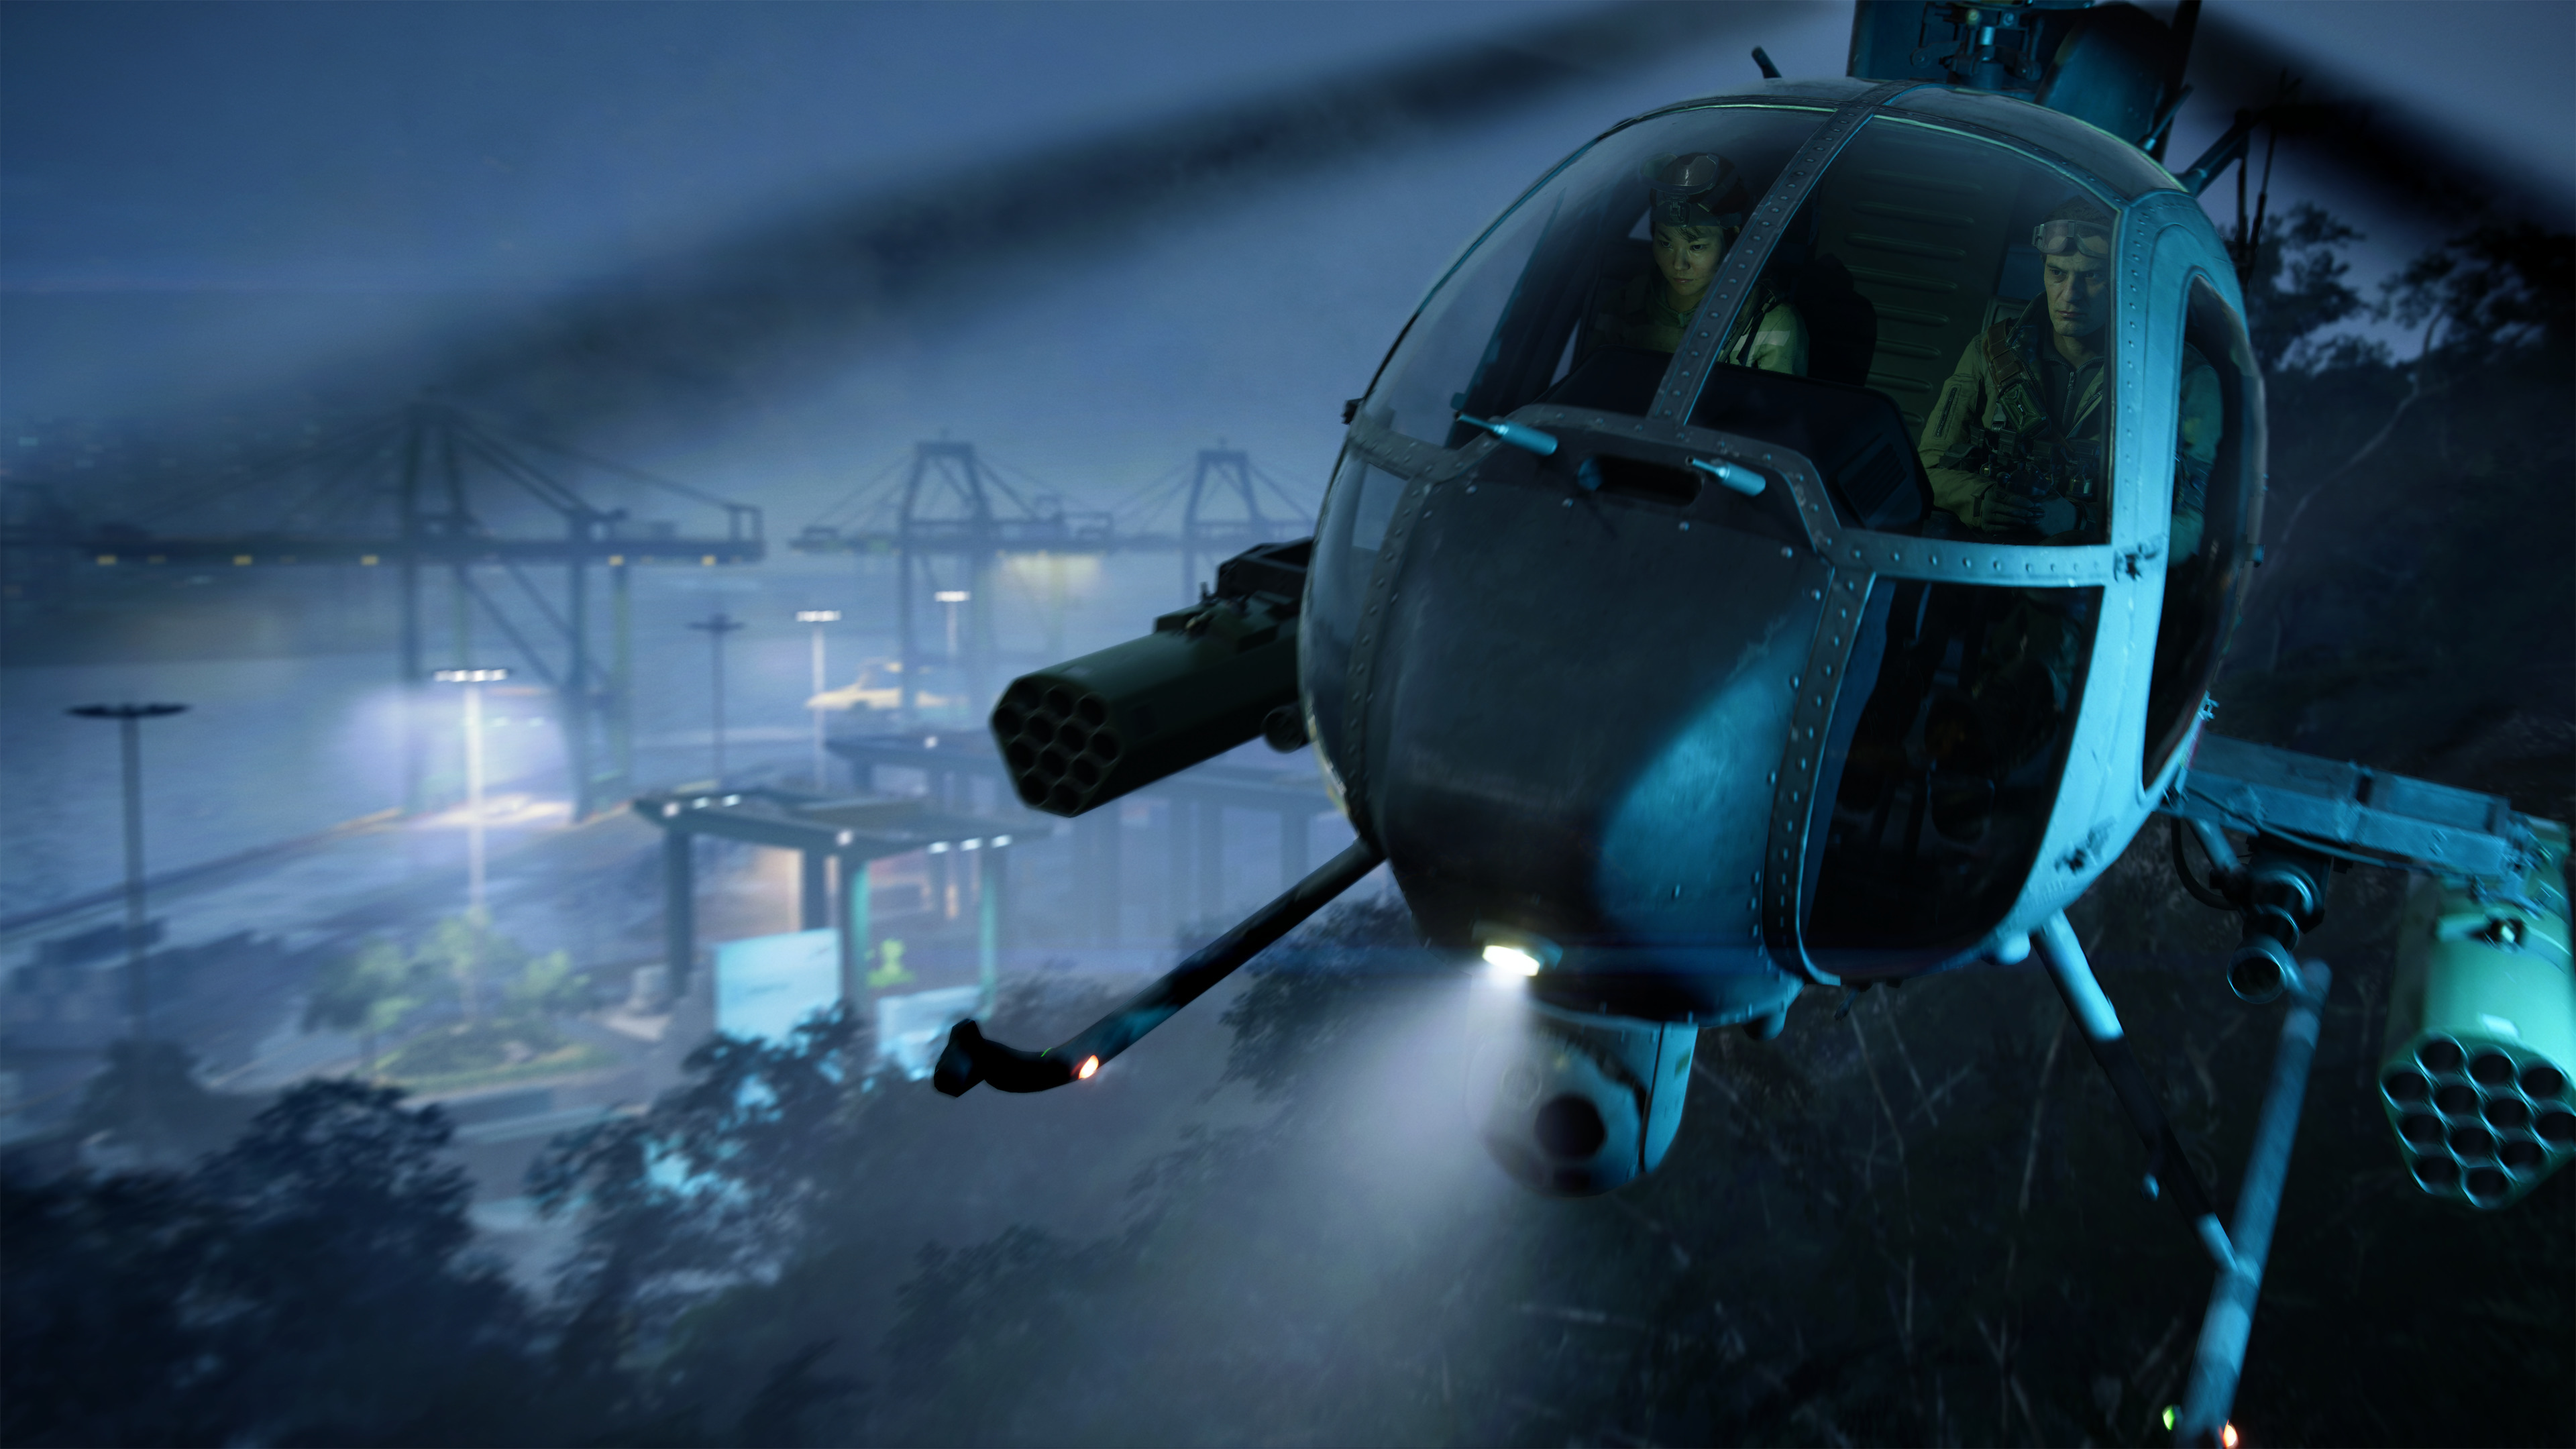 Descarga gratuita de fondo de pantalla para móvil de Helicóptero, Videojuego, Battlefield 2042.